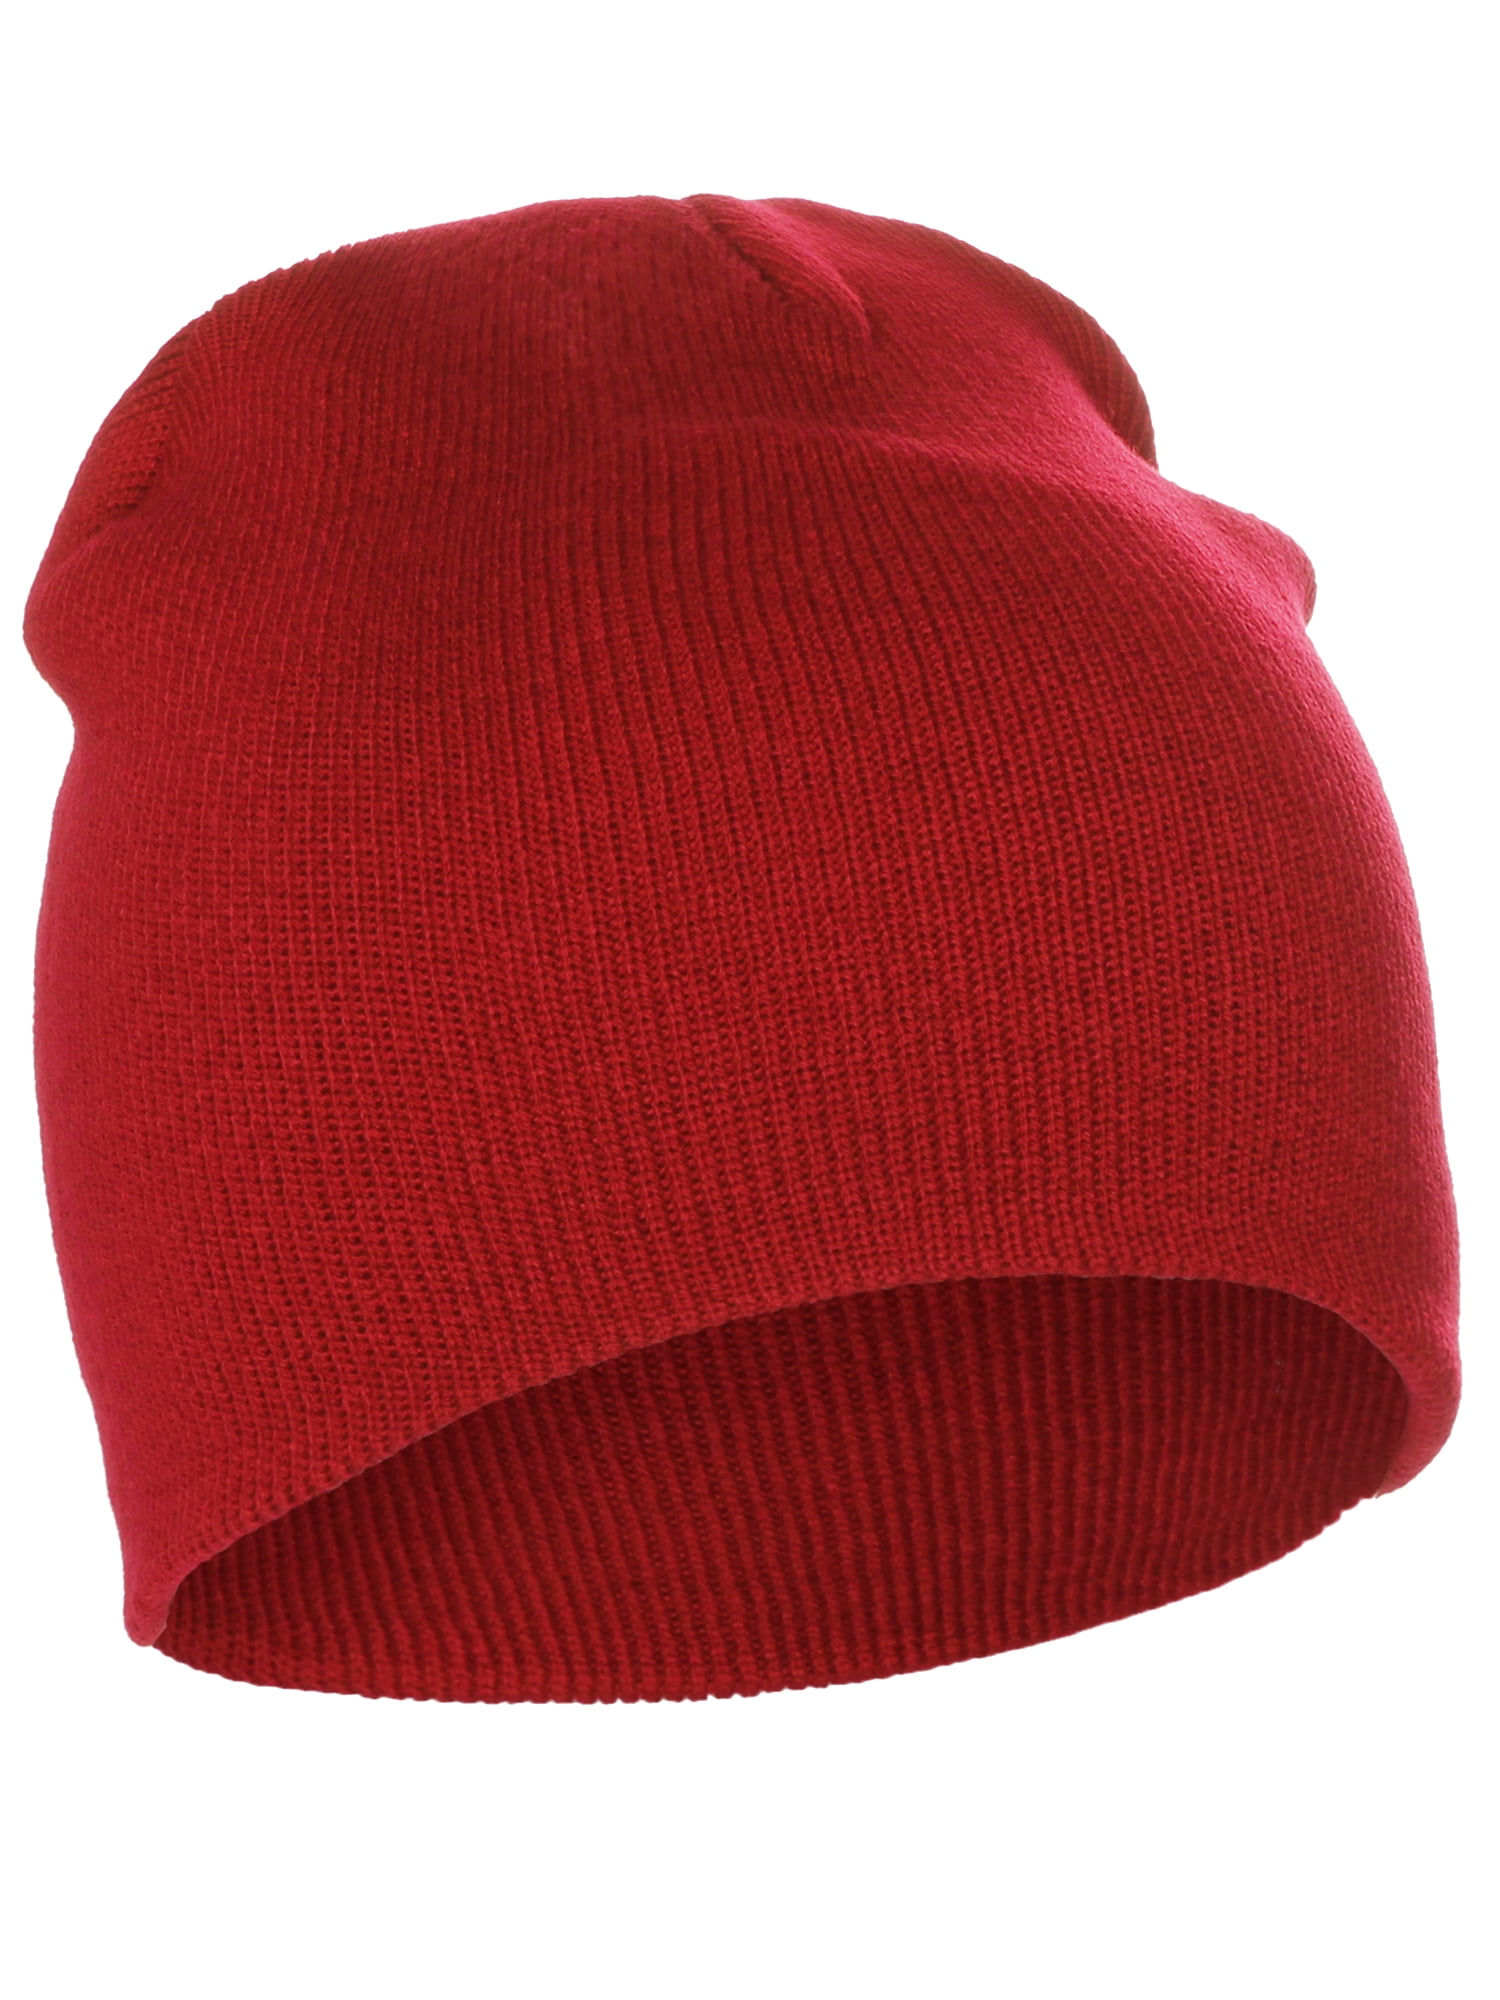 Classic Plain Cuffless Beanie Winter Knit Hat Skully Cap, Red